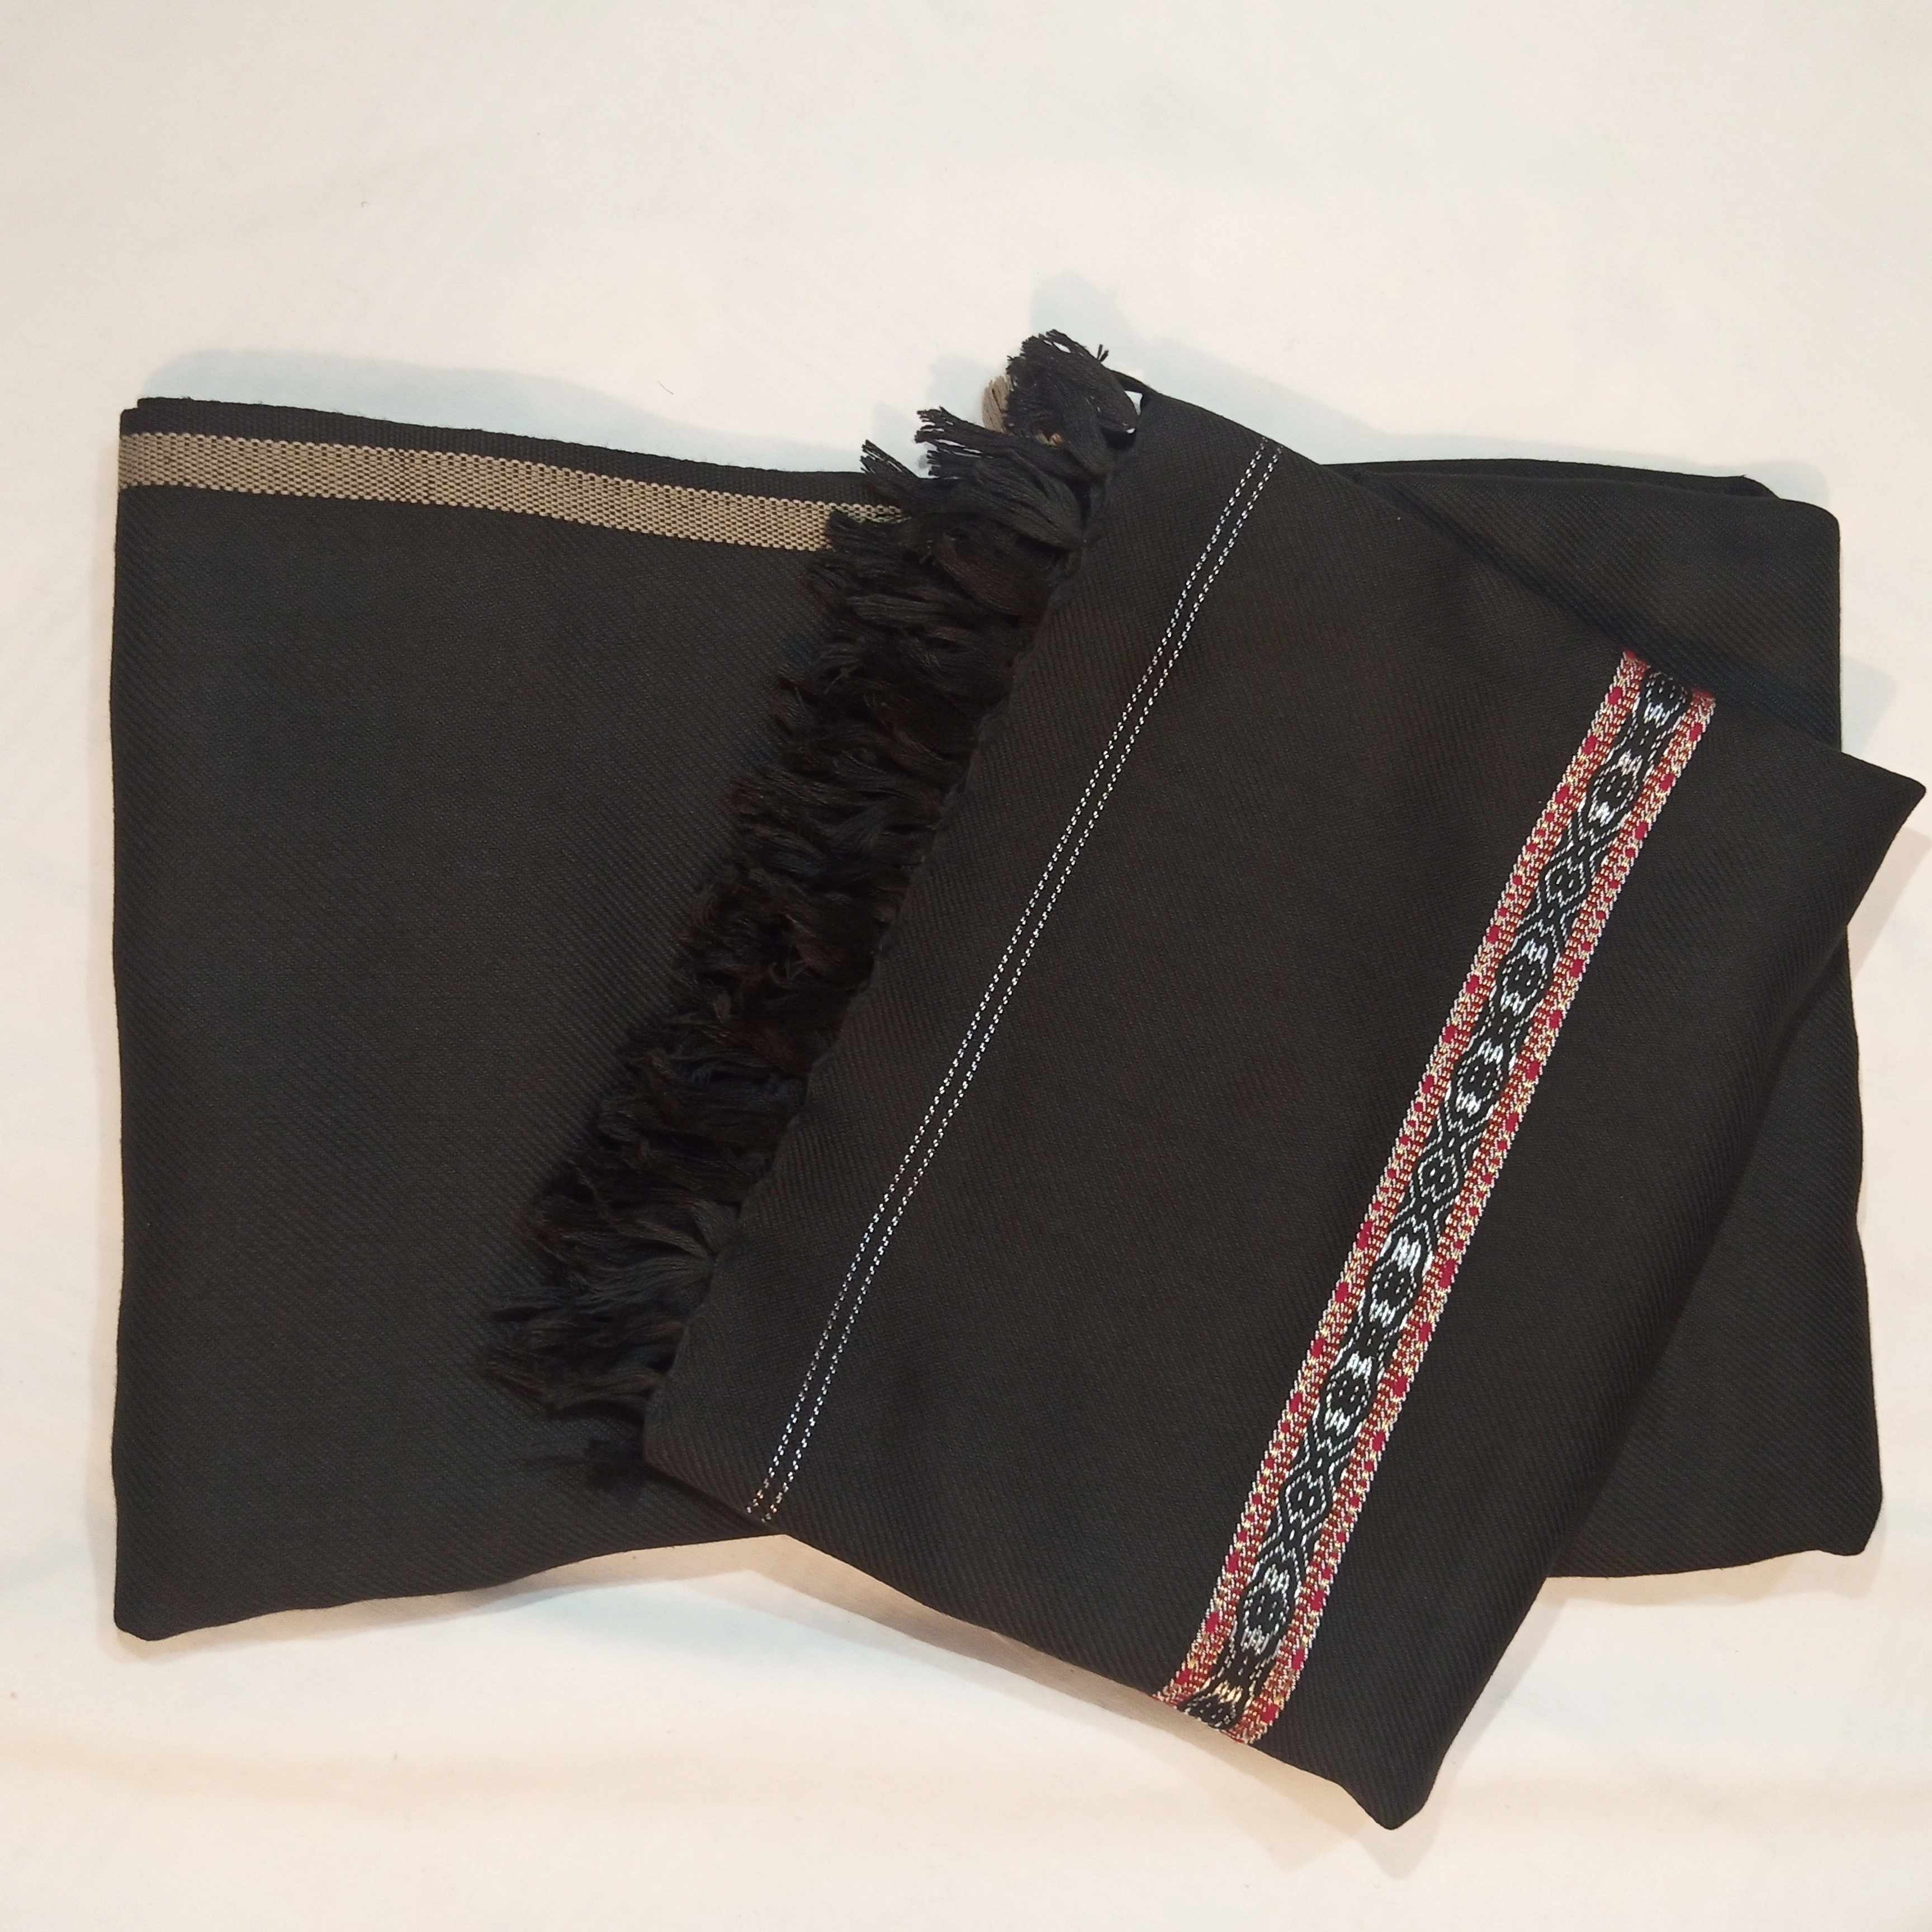 First image of woollen black shawl.